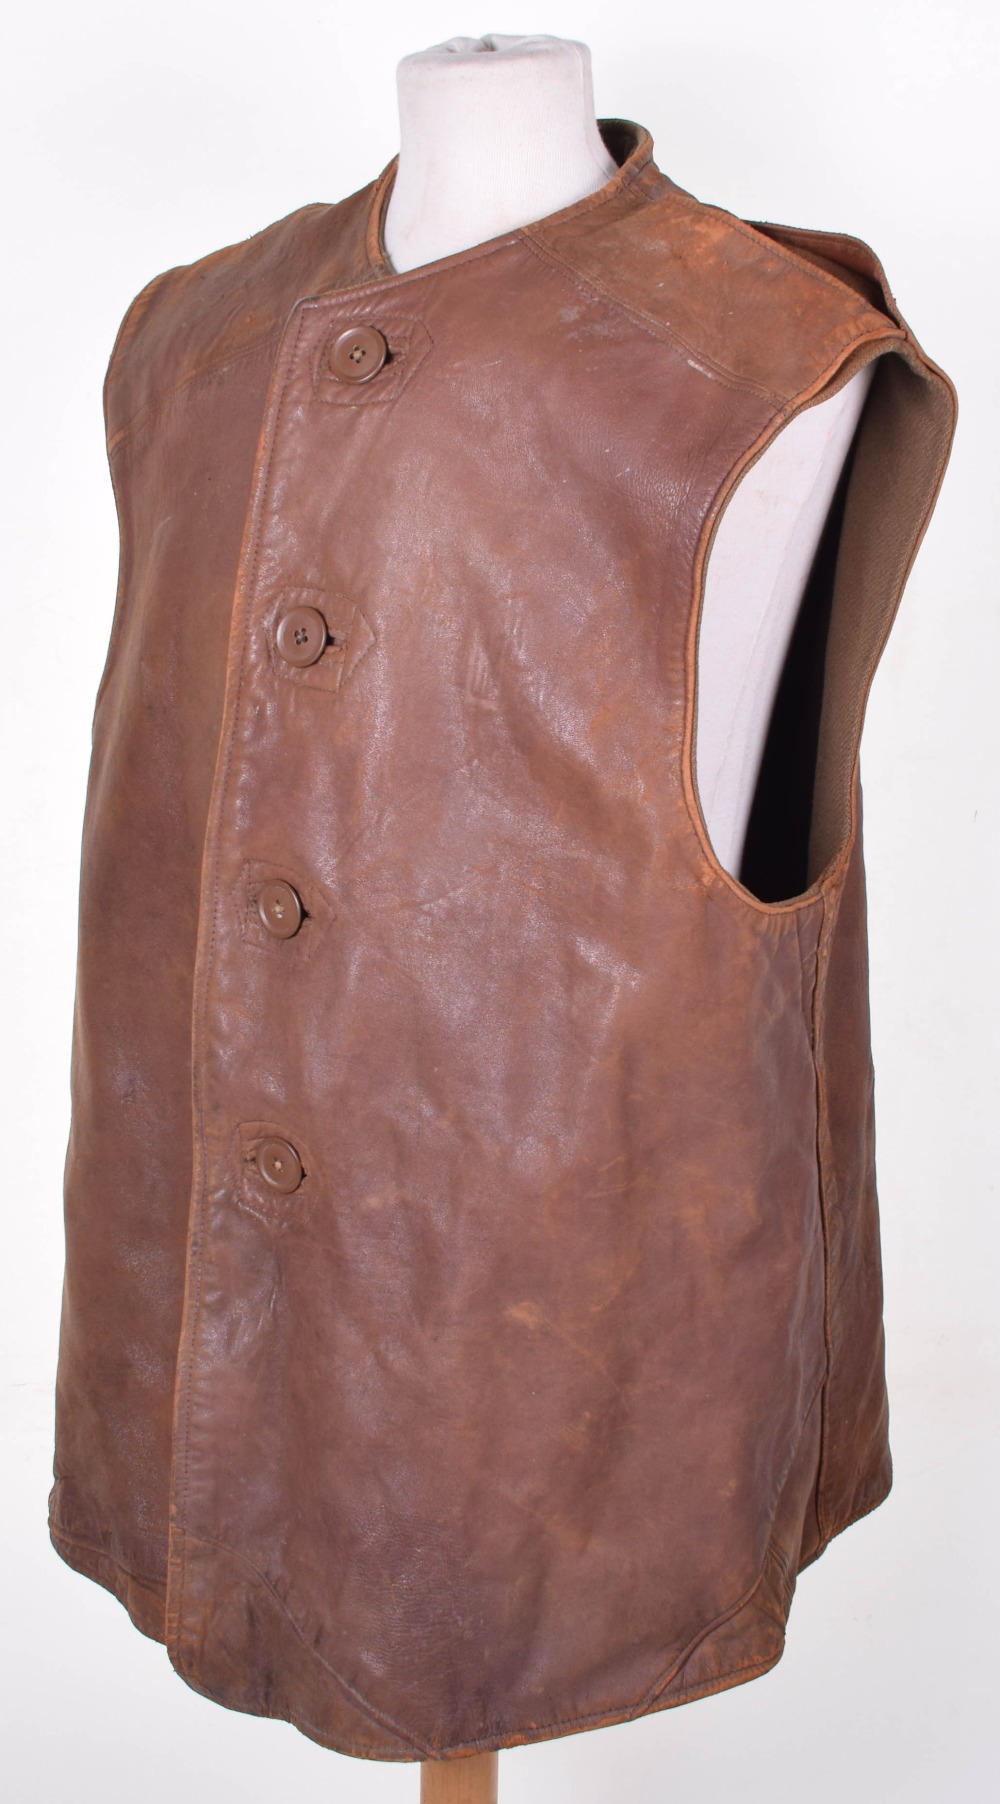 WW2 British Leather Jerkin - Image 2 of 8